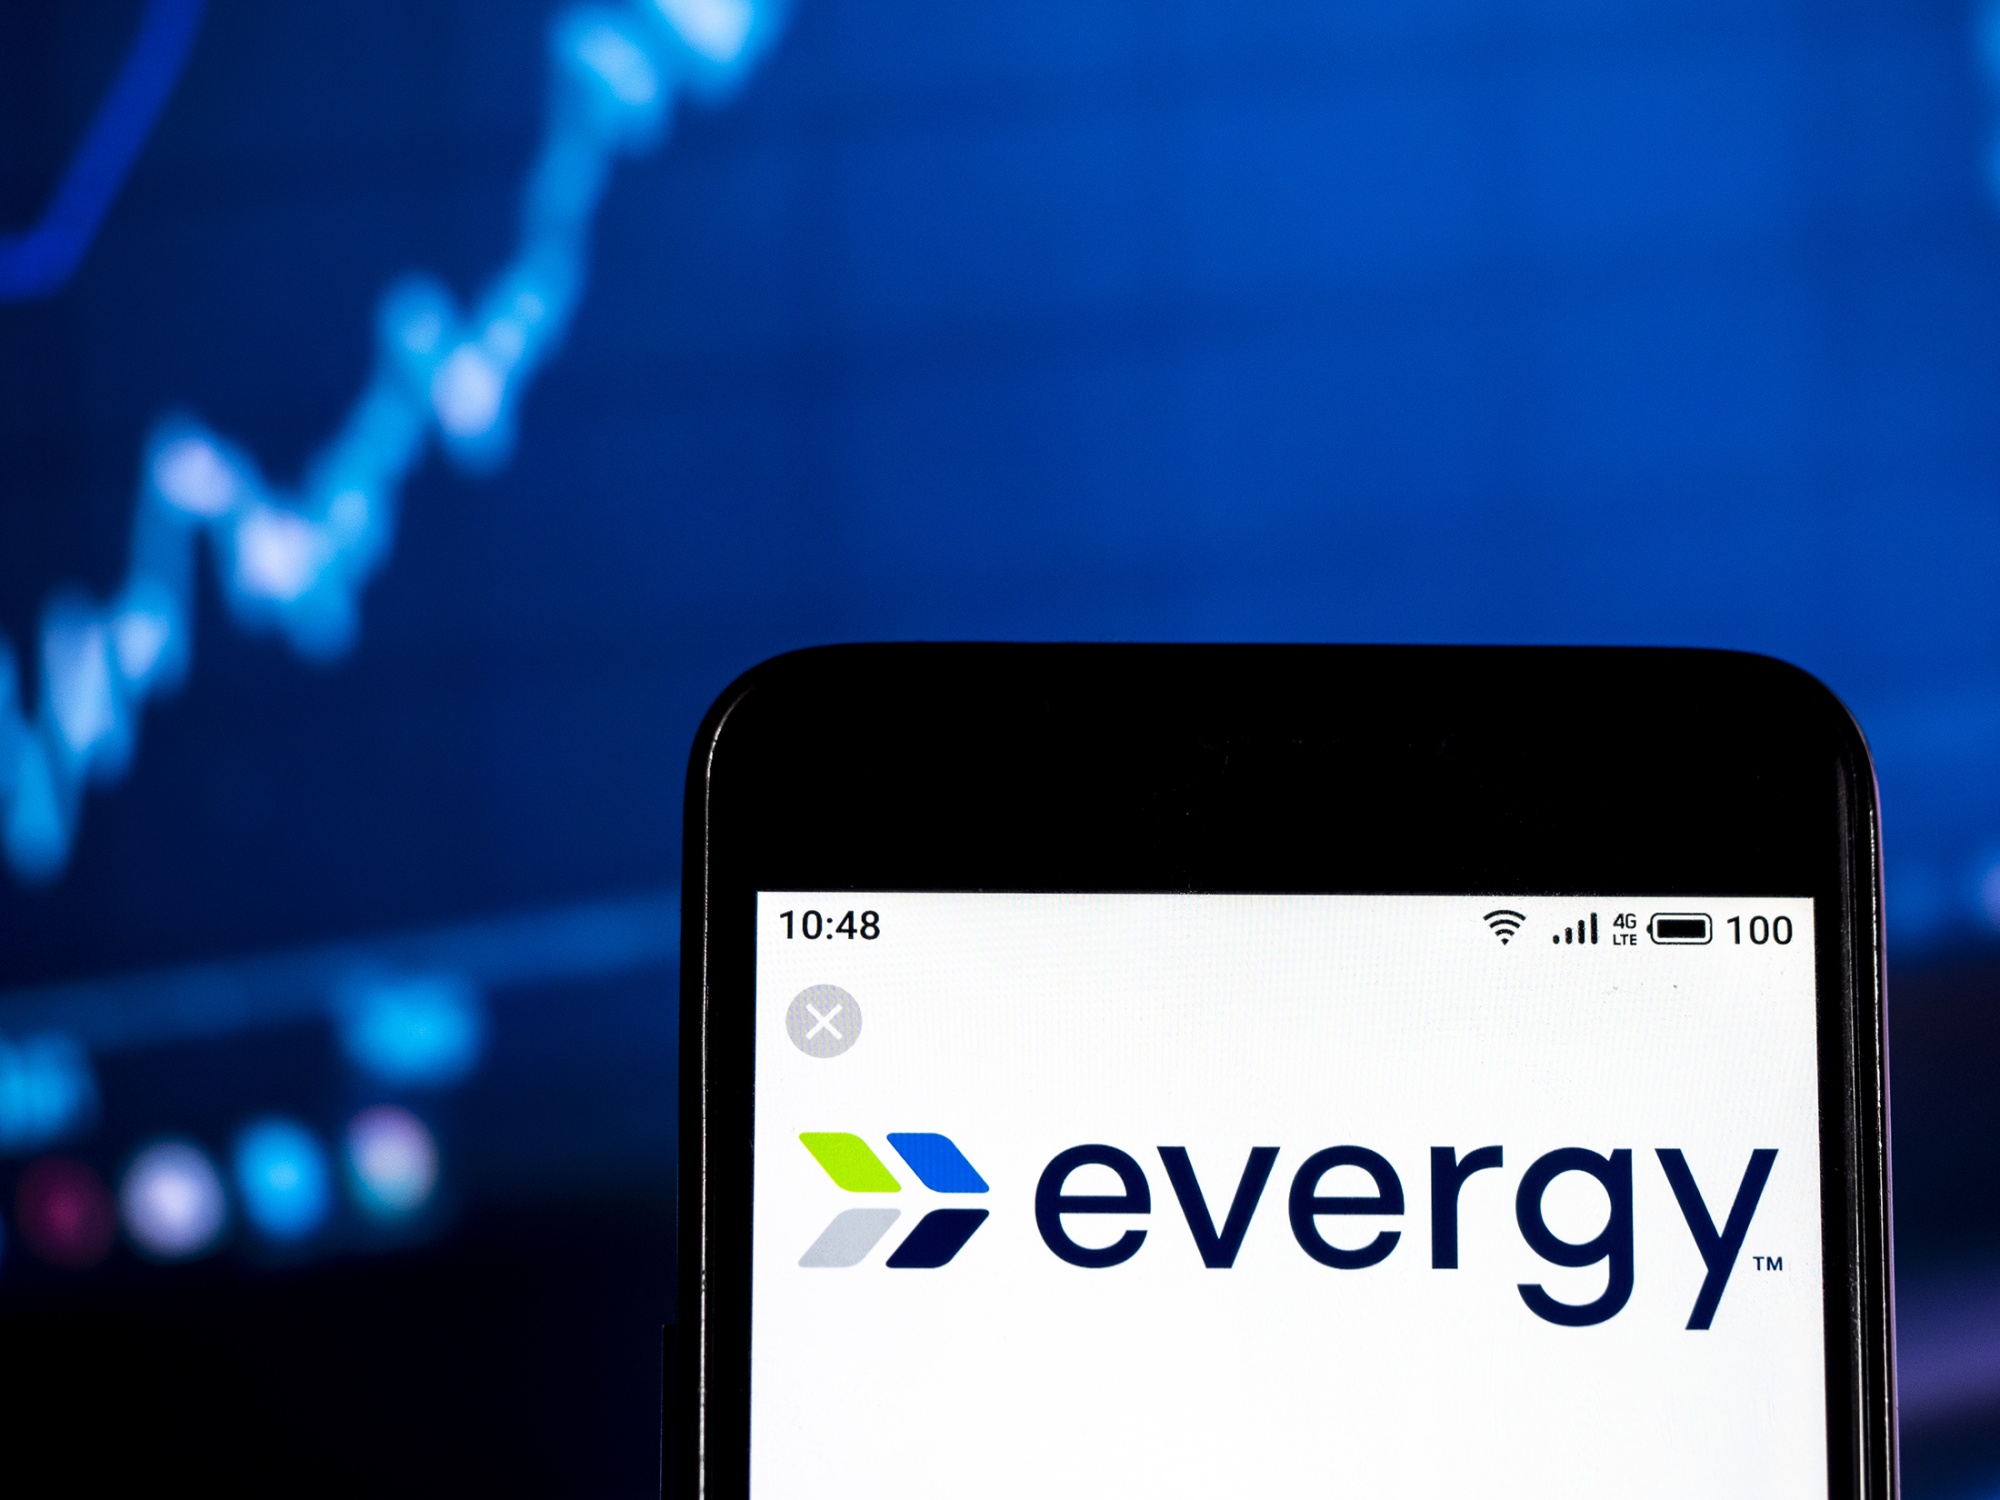 Evergy logo on a smartphone.